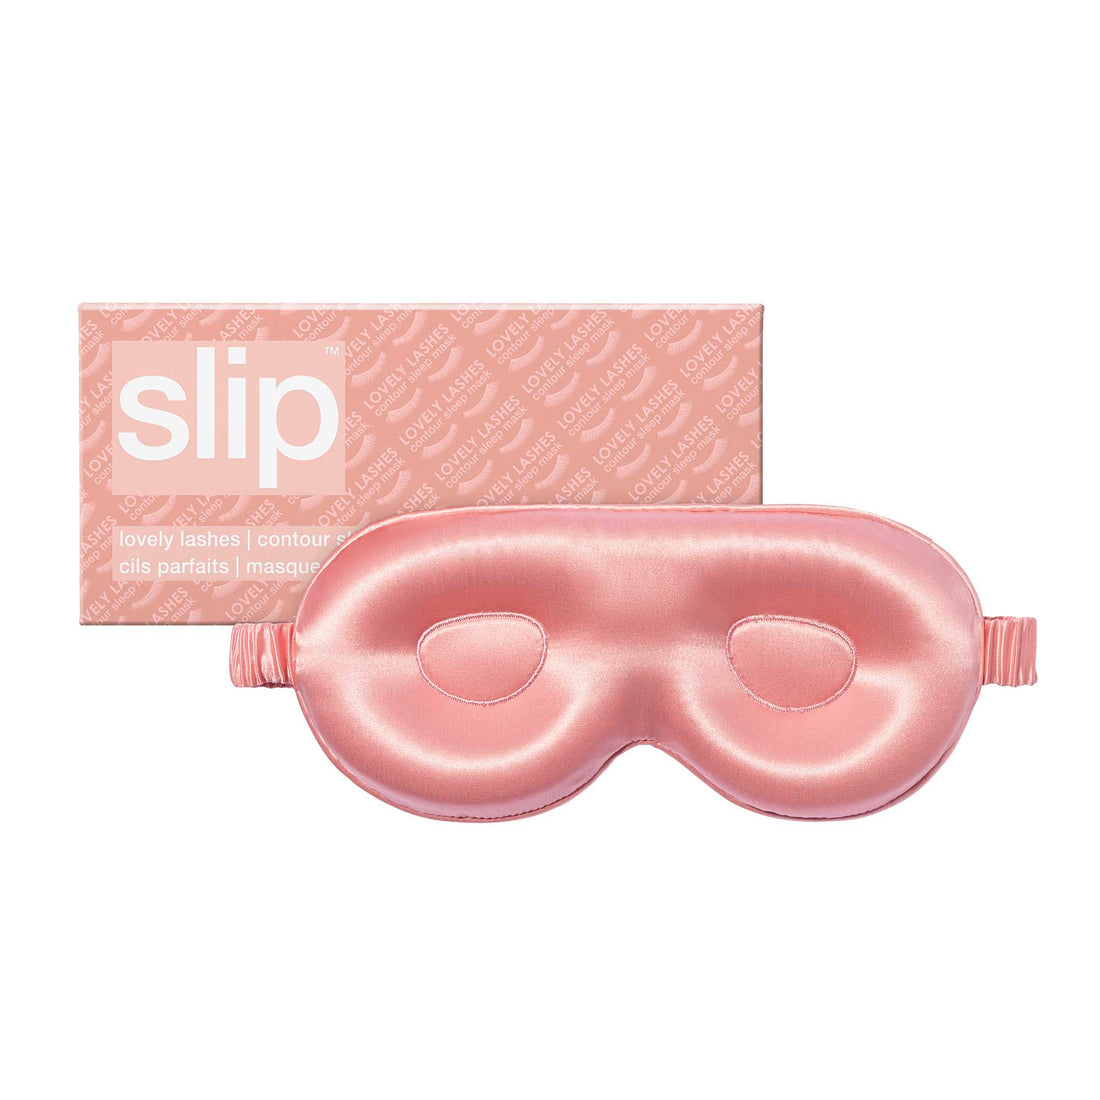 Slip Contour Sleep Mask